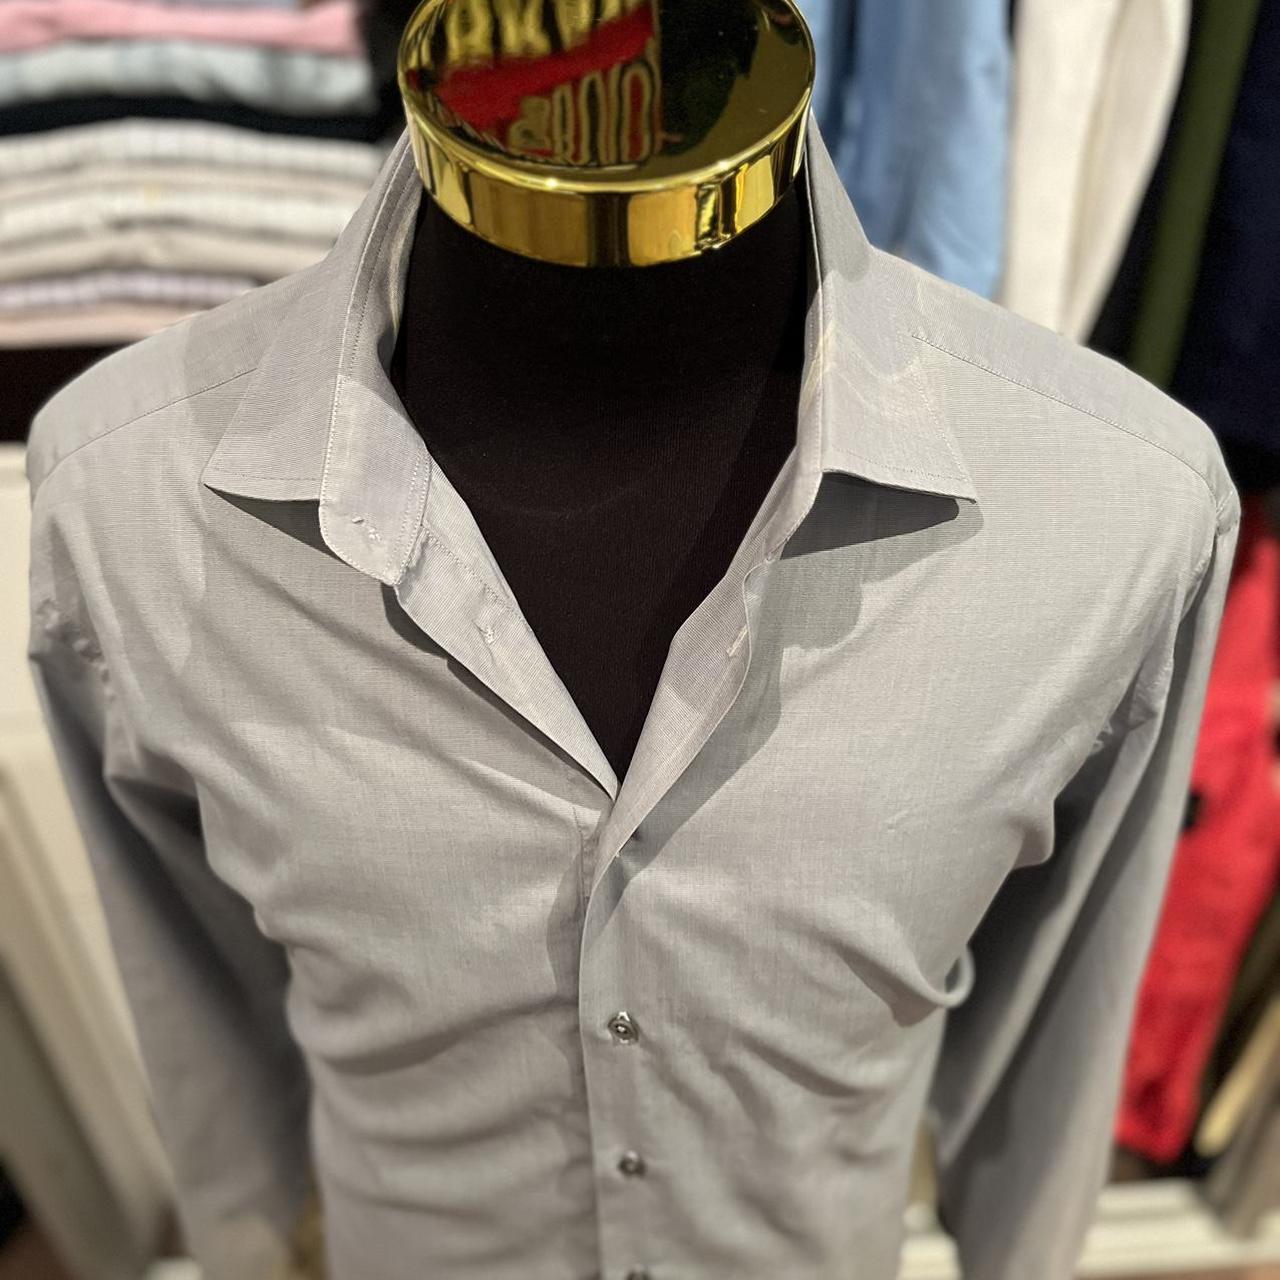 Giorgio Armani 100% Cotton Double Cuff Business Shirt Size XL Made In Italy in primo condition